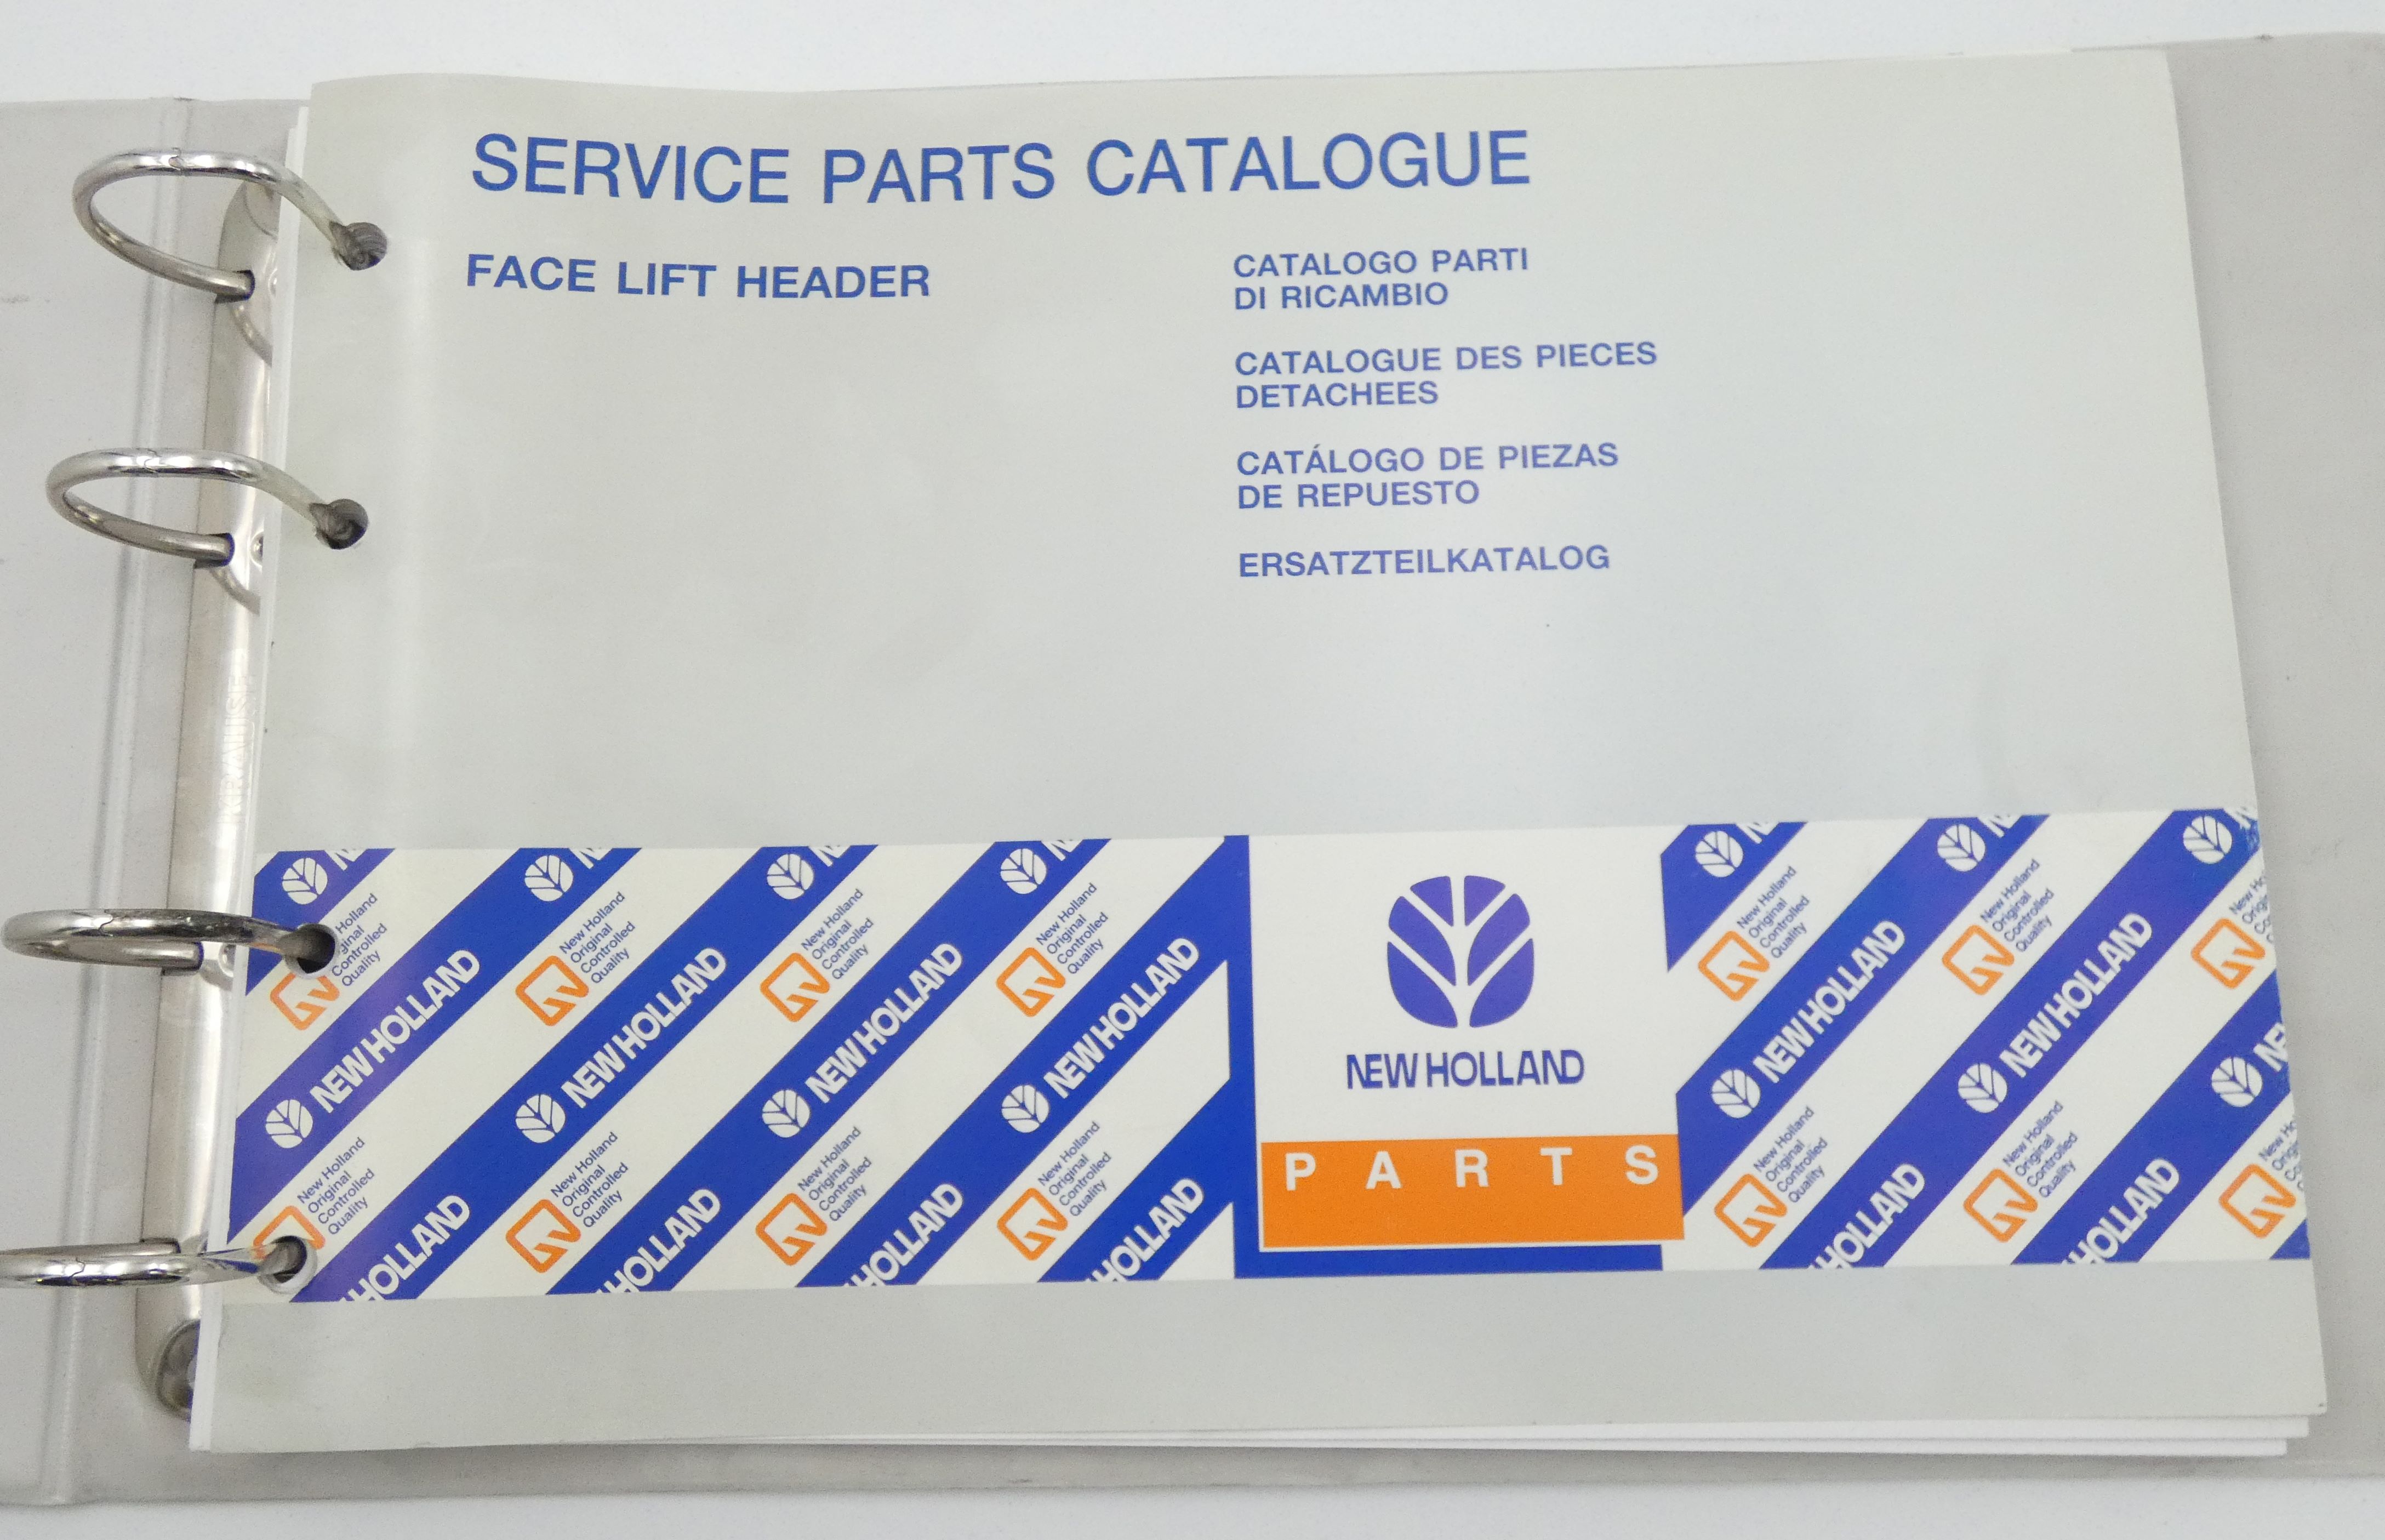 New Holland face lift header service parts catalogue